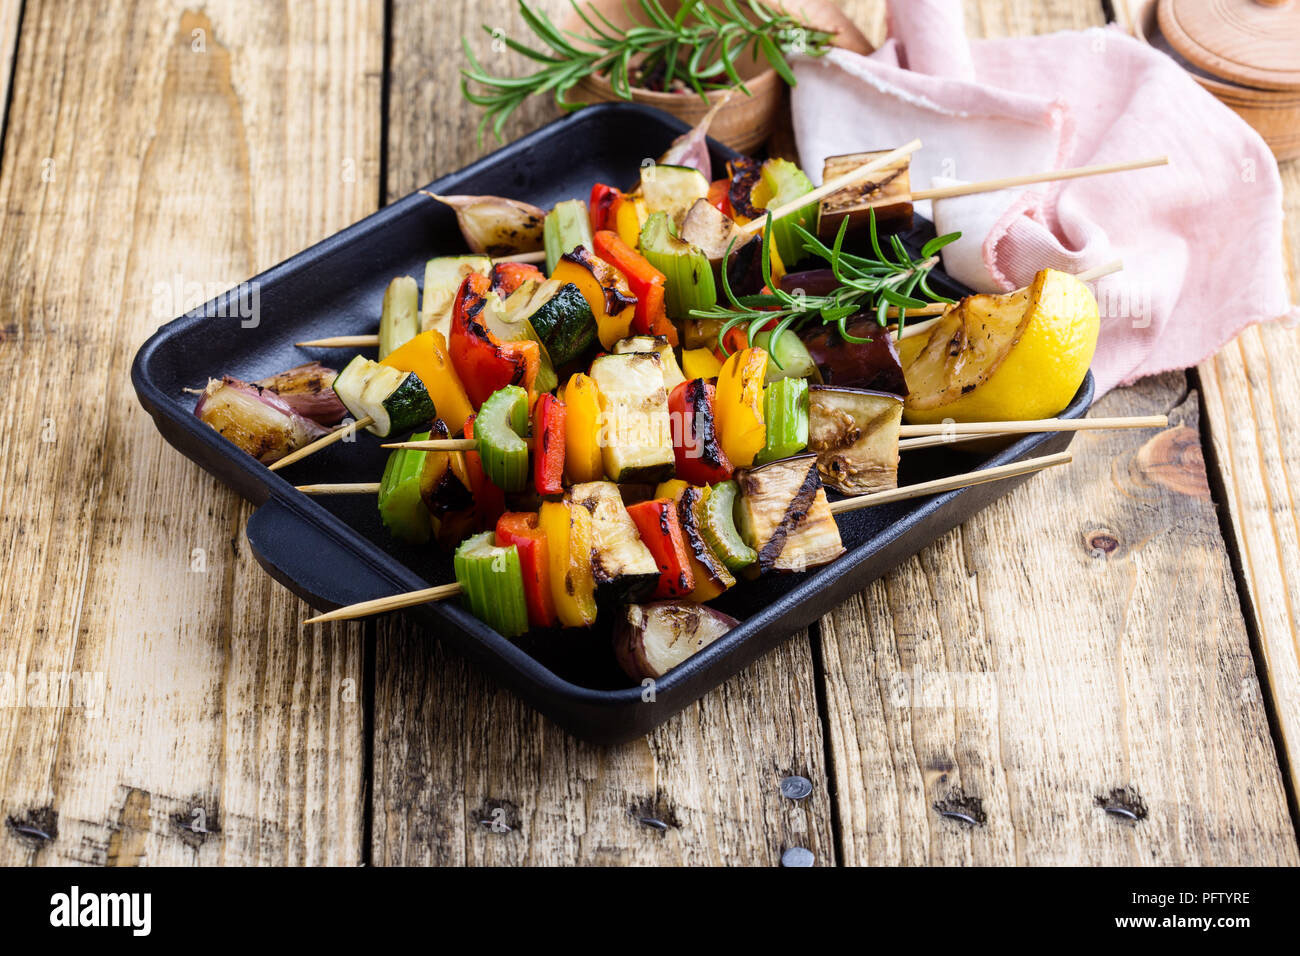 Coloridas brochetas de verduras asadas en sartén de hierro fundido. Vegan meal de verano sobre mesa de madera rústica Foto de stock